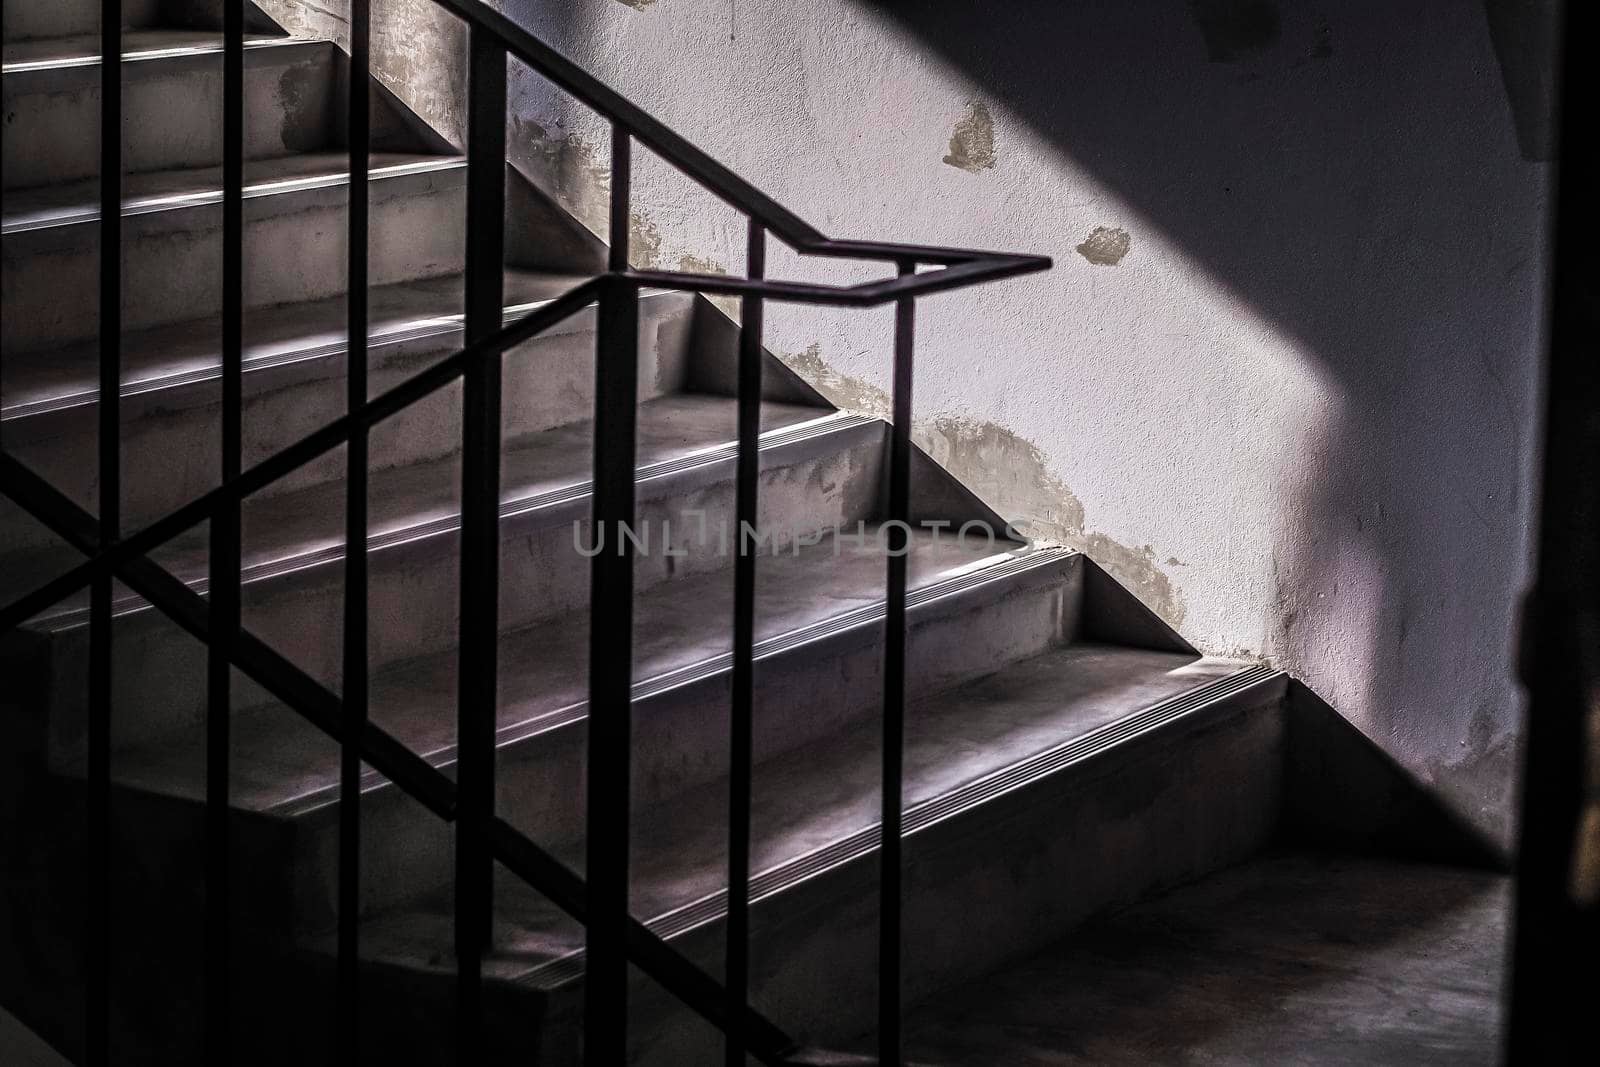 Emergency Fire Concrete Staircase. Concrete Stairs with Sunlight. Exit Escape concept idea by Petrichor